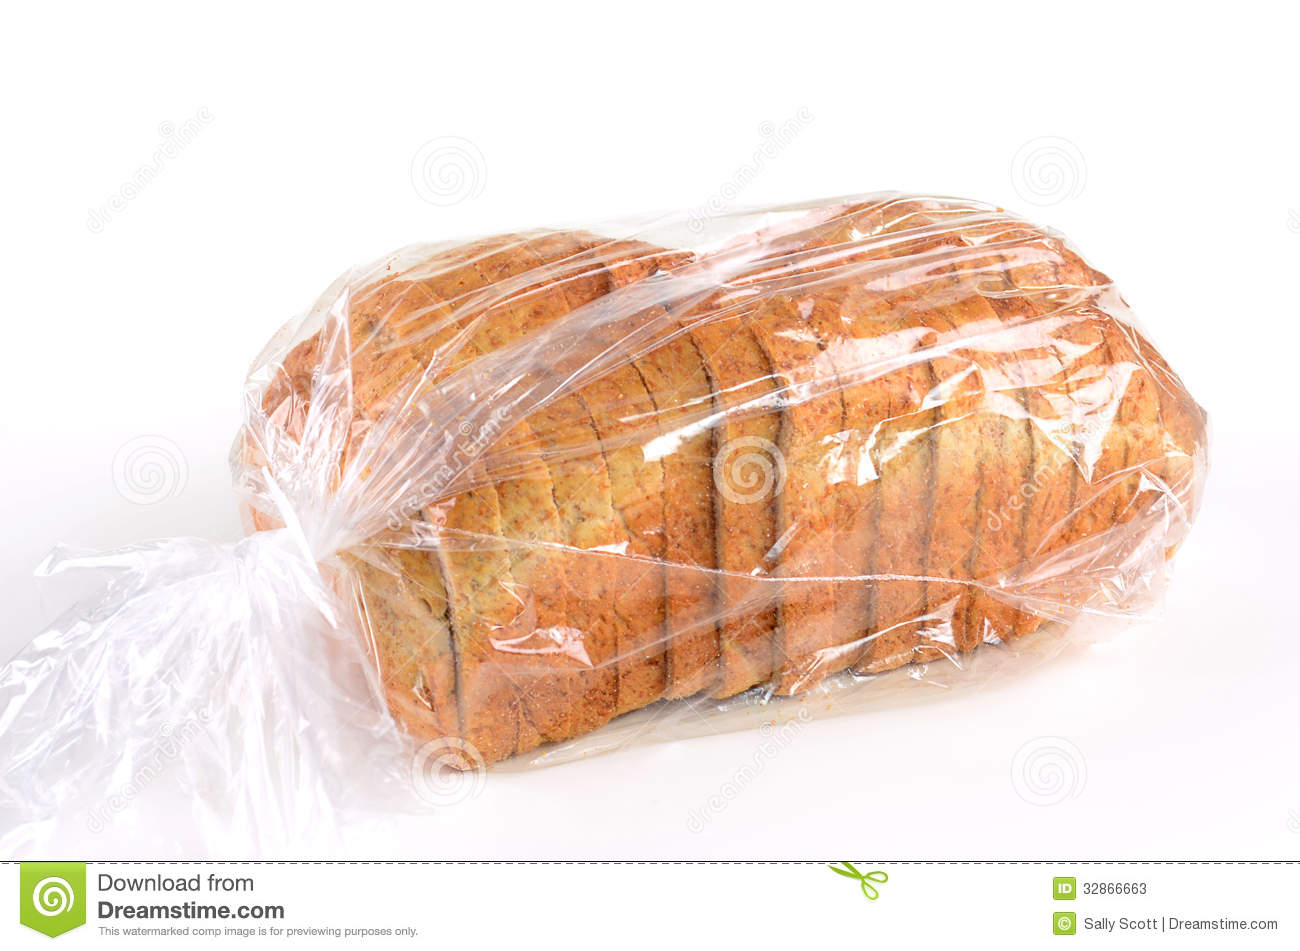 Whole Grain Sliced Bread In Plastic Bag Stock Photos   Image  32866663